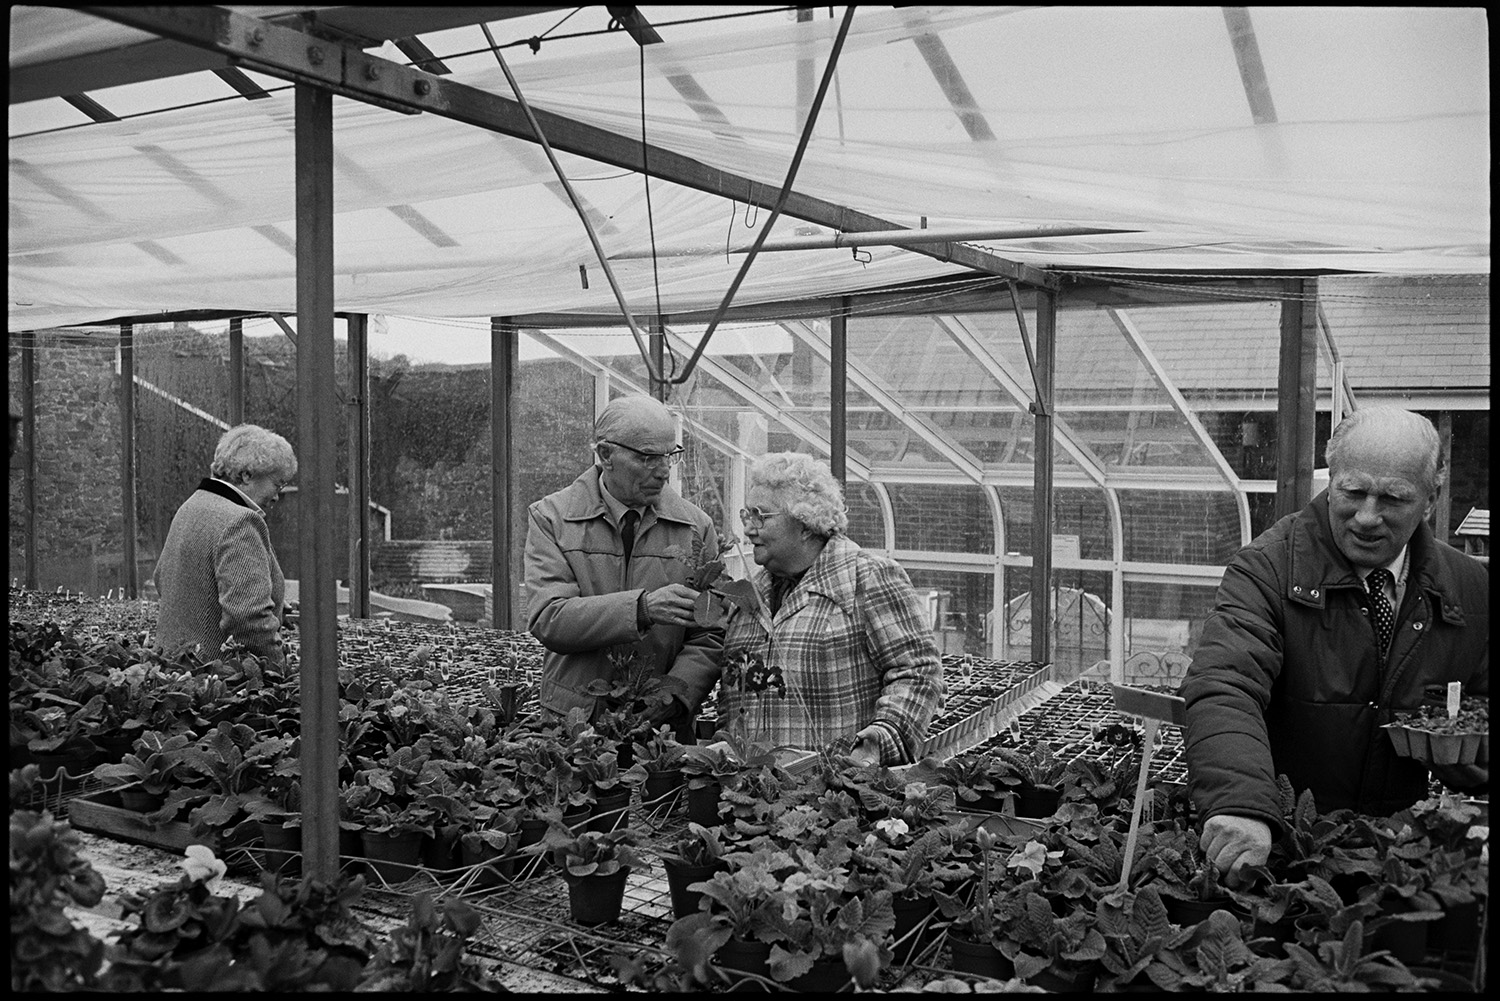 People choosing plants, flowers at garden centre.
[Two men and two women choosing plants at the Eggesford Garden Centre.]